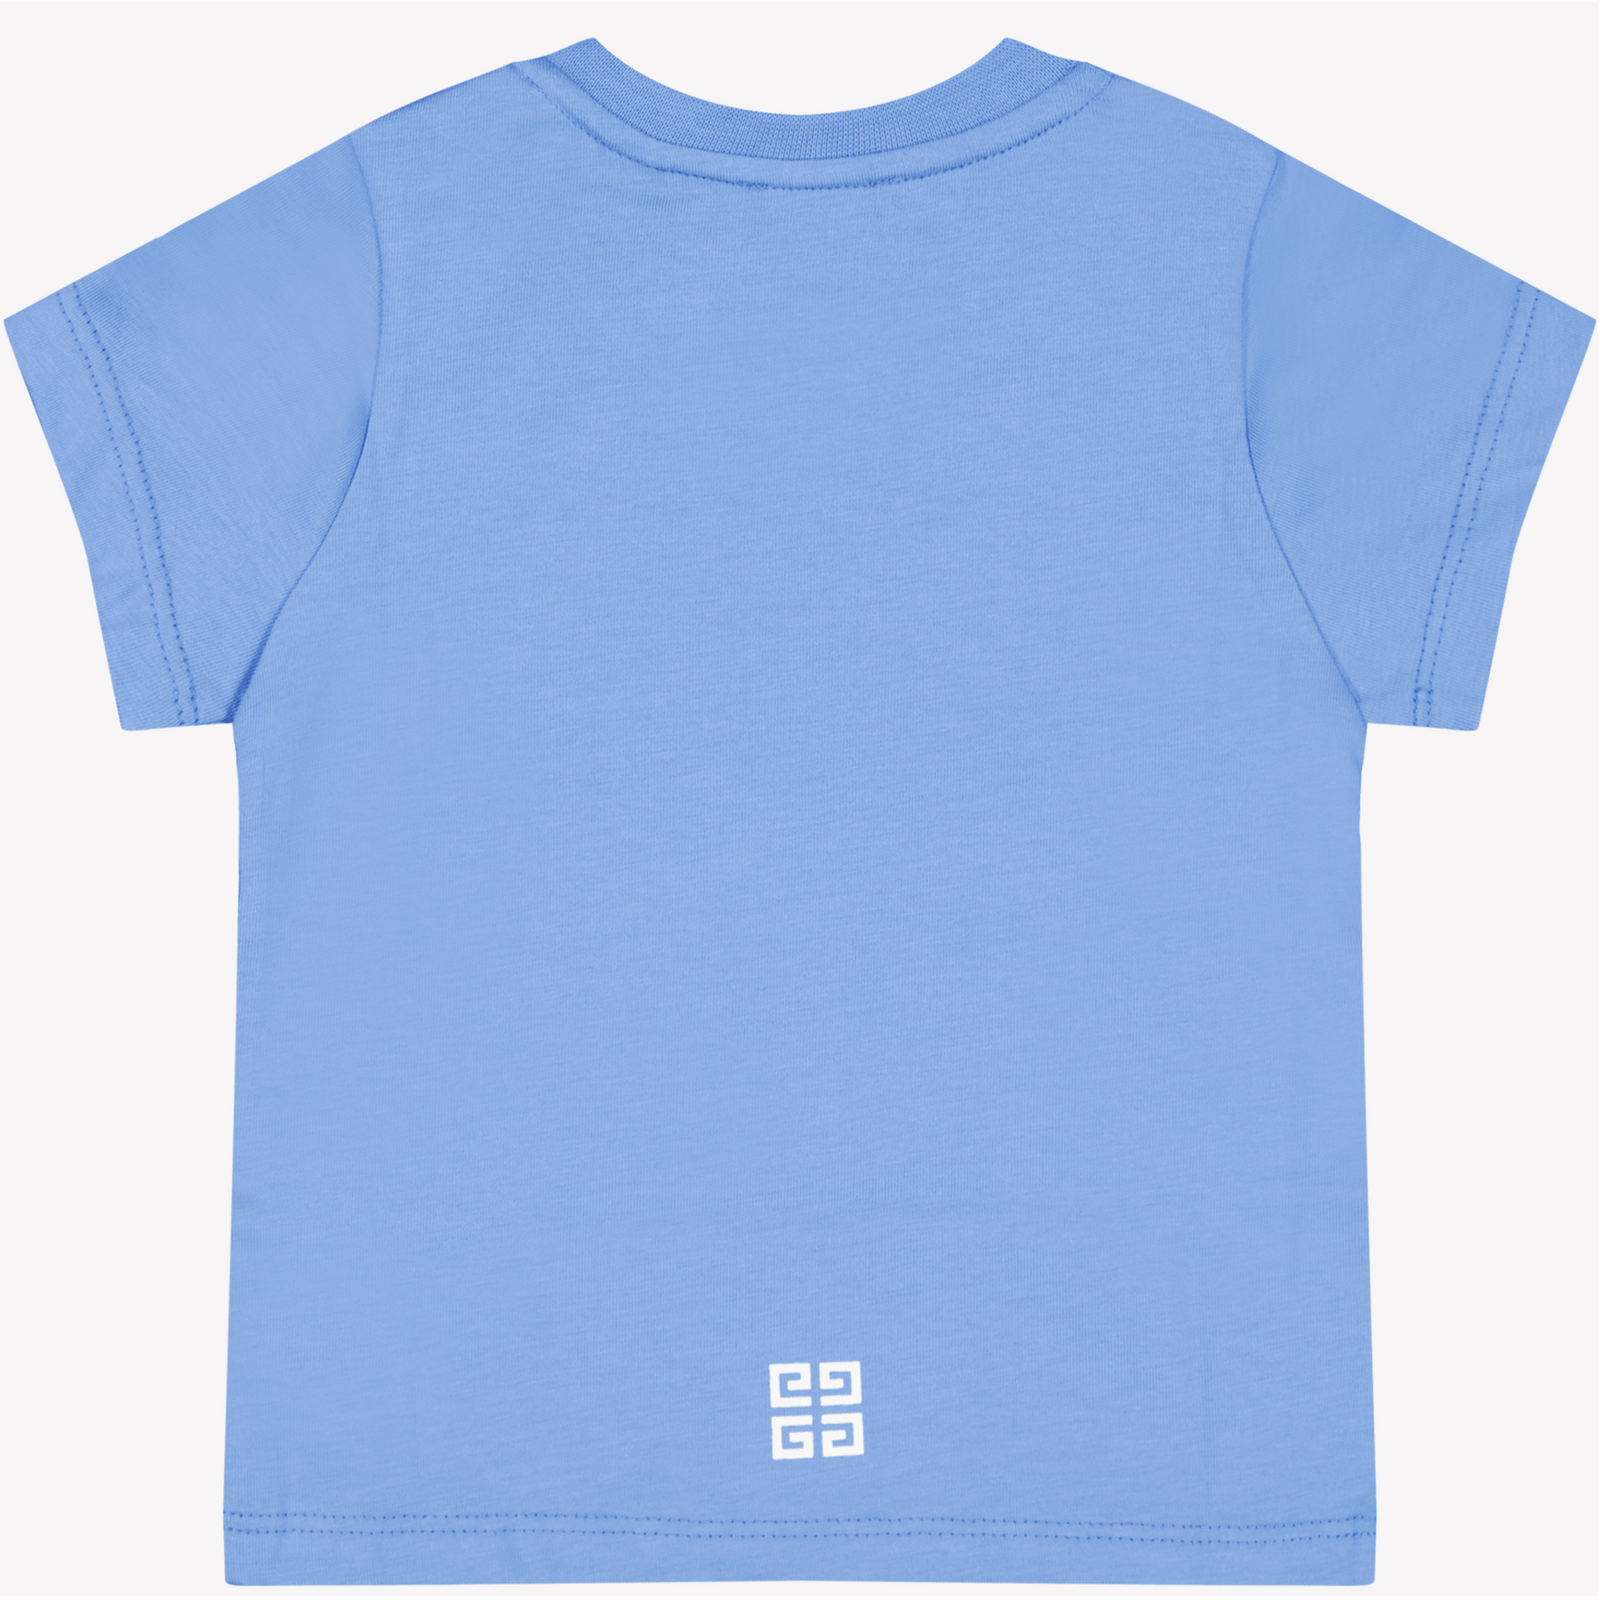 Givenchy Baby Jongens T-Shirt Blauw 6 mnd